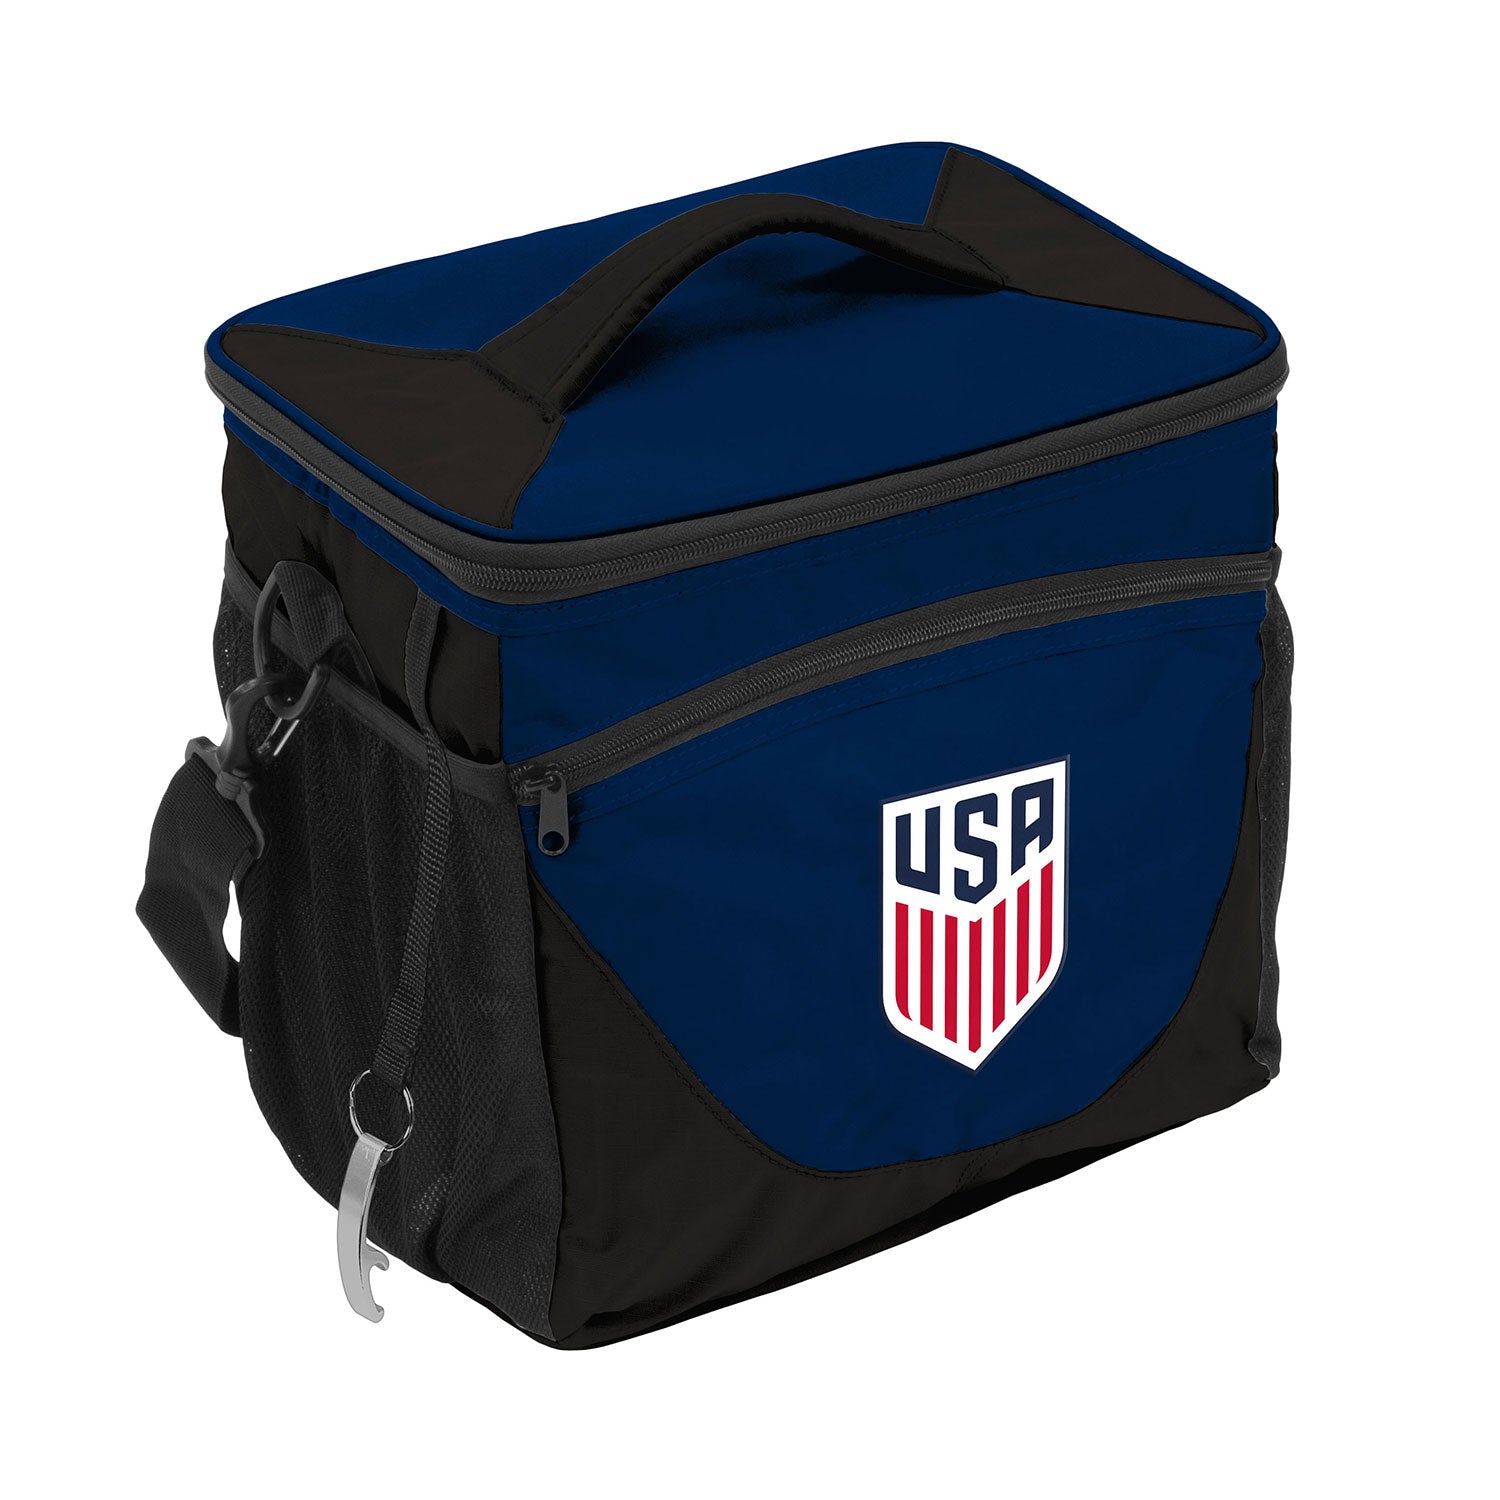 Logo Brands USA Soccer Camo Slim Can Cooler